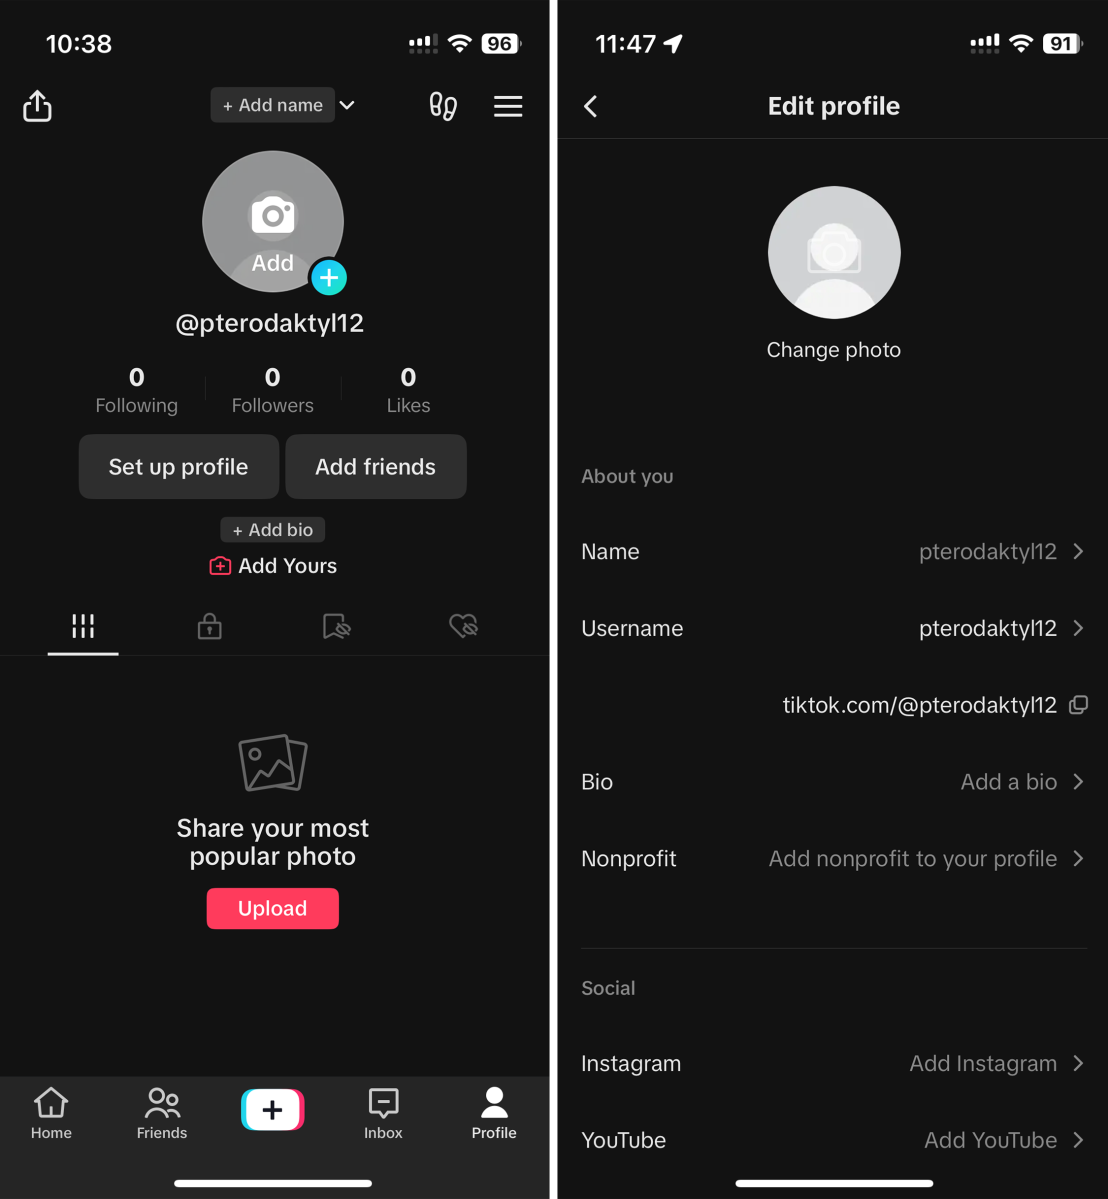 Screenshots of TikTok's profile change option